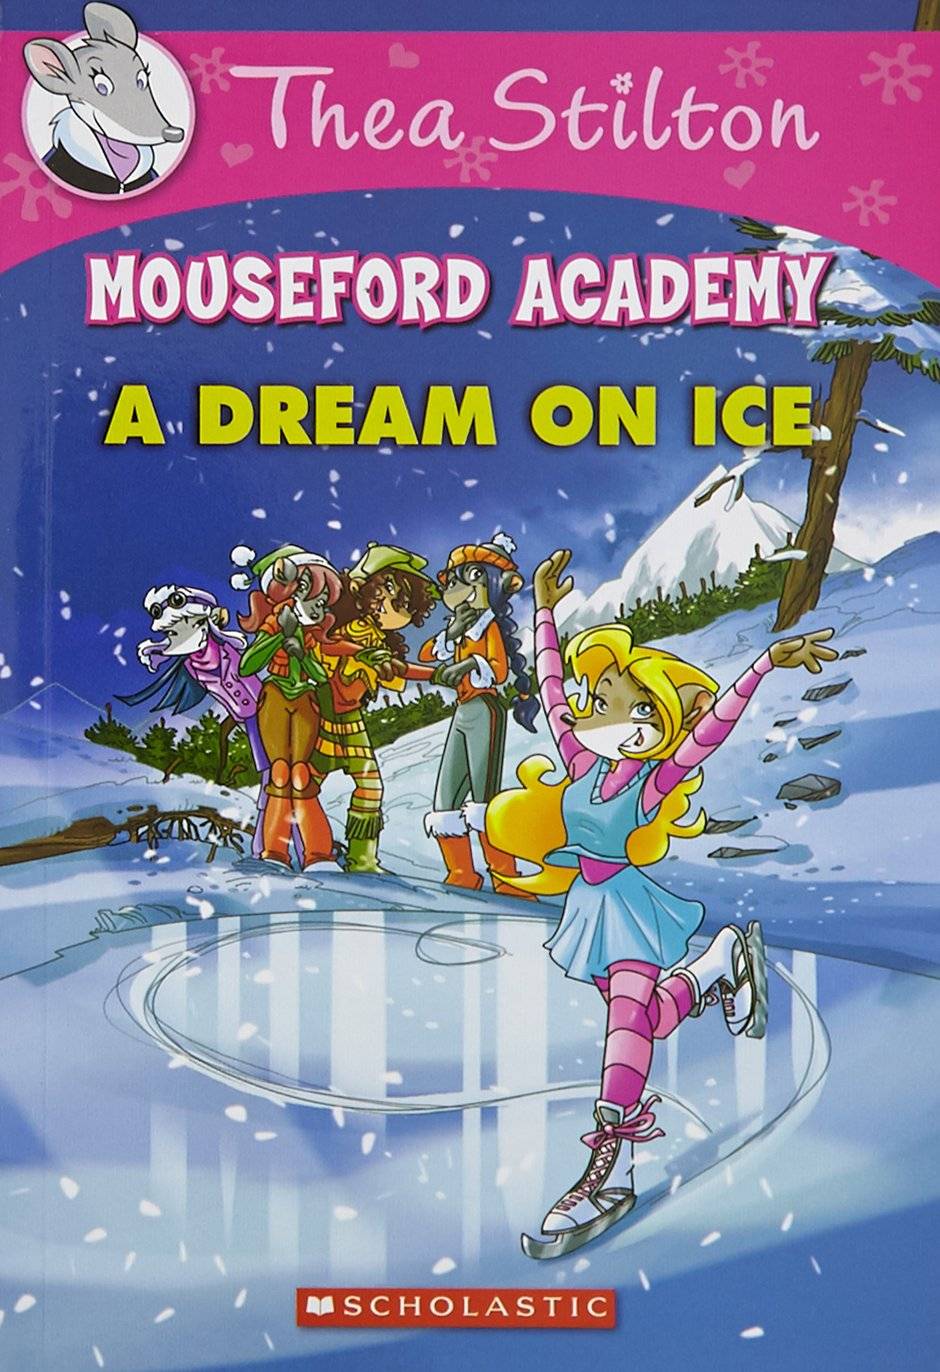 IMG : Thea Stilton Mouseford Academy -A dream on ice#10